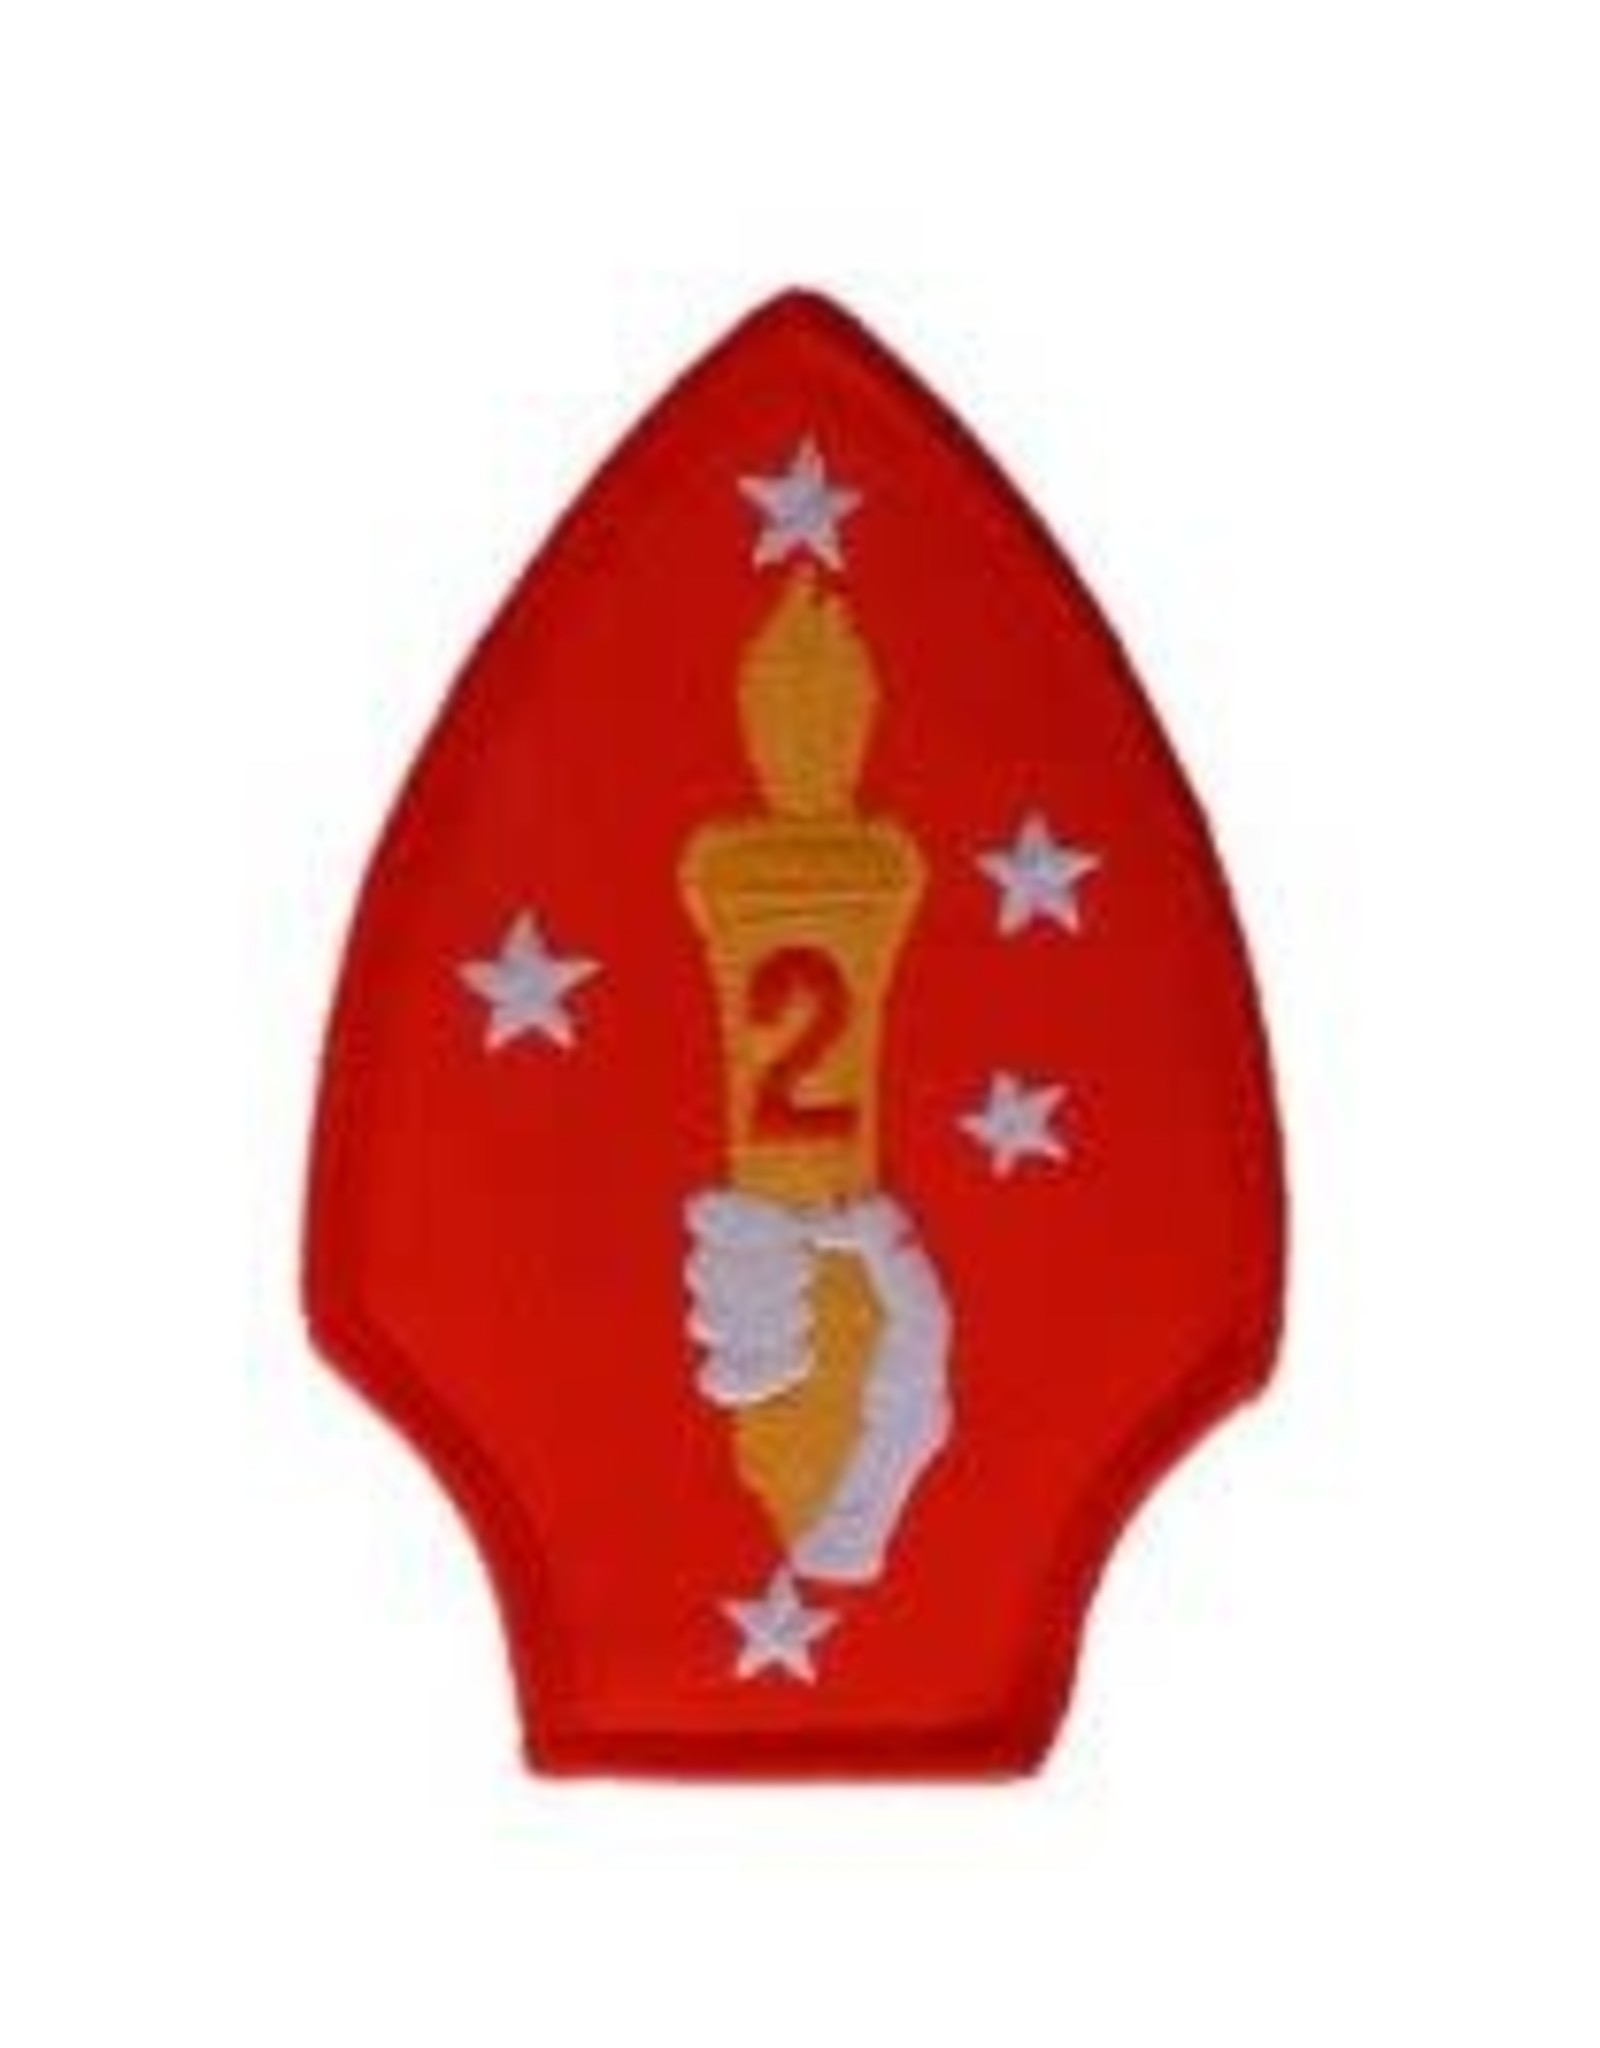 Patch - USMC 2nd Division